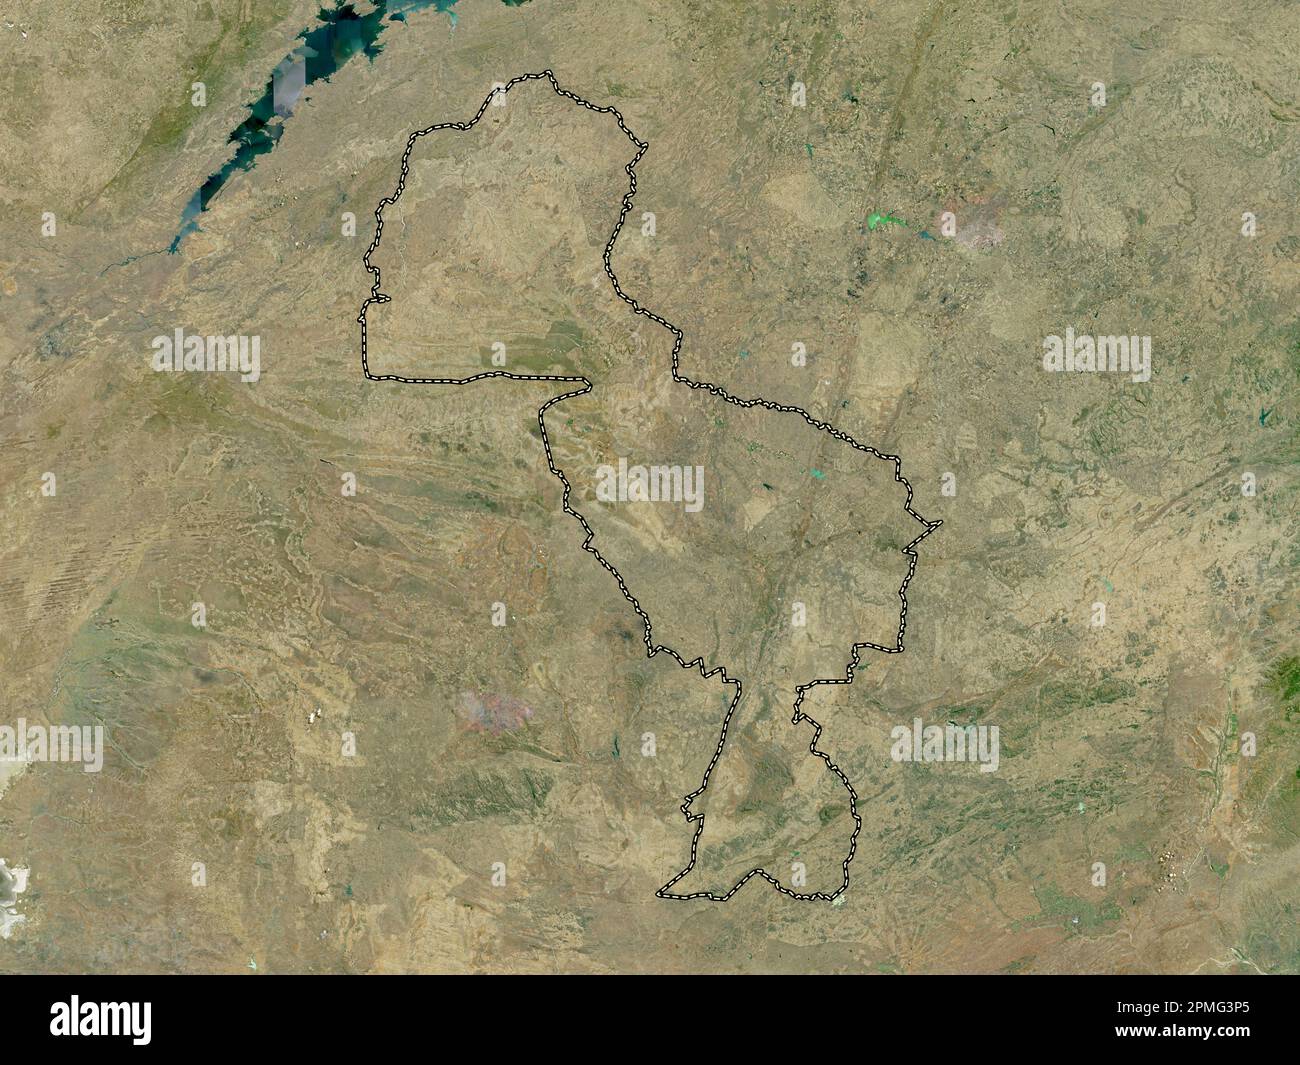 Midlands, province of Zimbabwe. High resolution satellite map Stock Photo